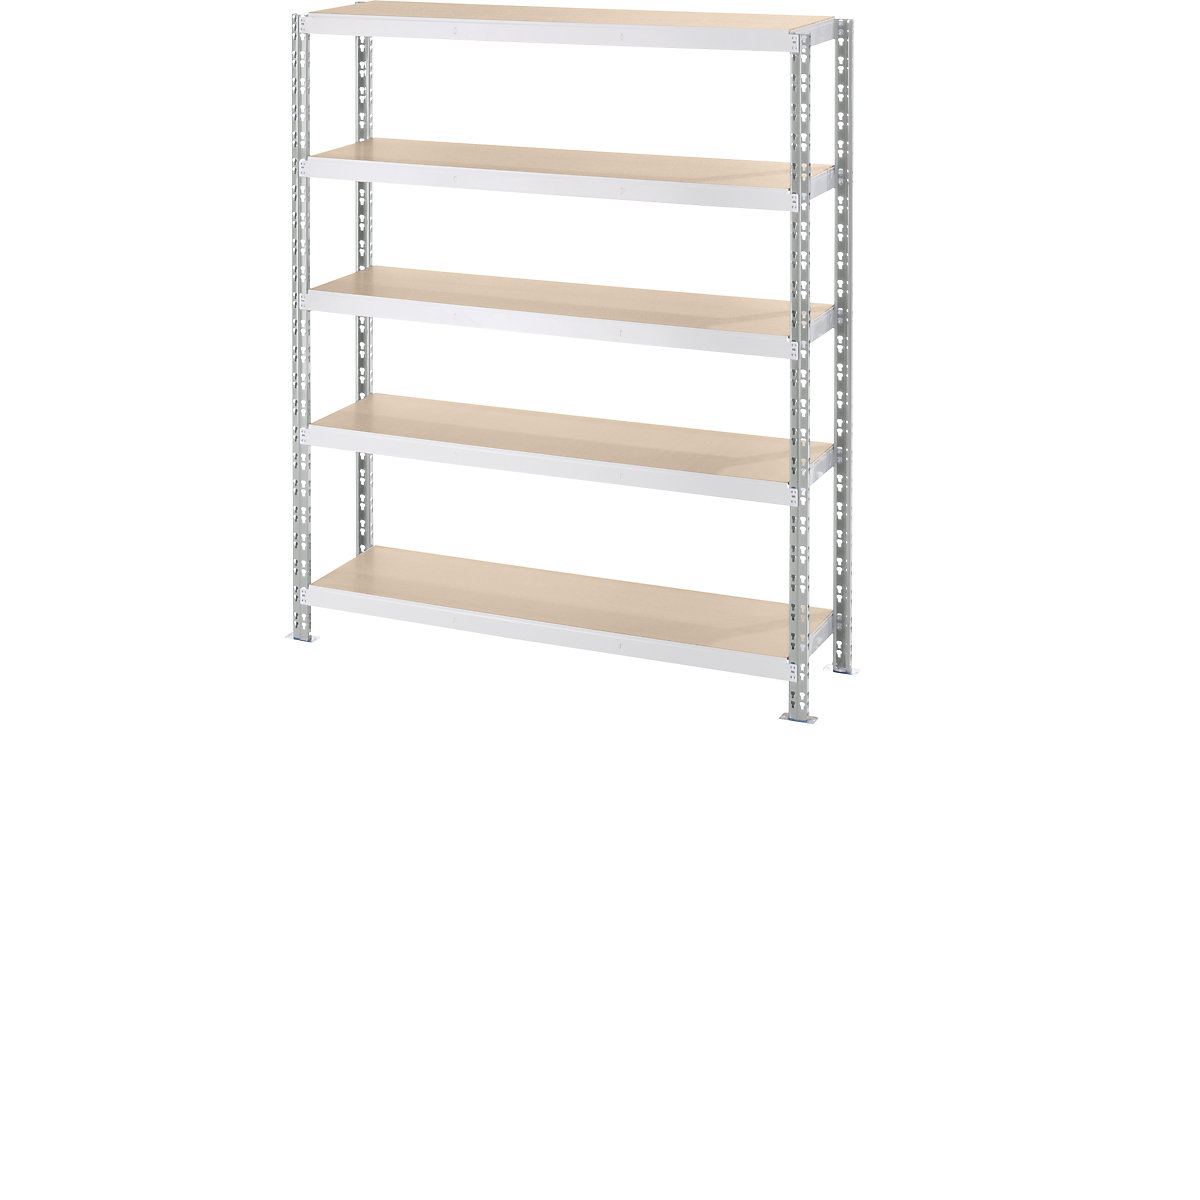 Wide span boltless shelf unit with moulded chipboard shelves, depth 500 mm, standard shelf unit, HxW 1820 x 1550 mm